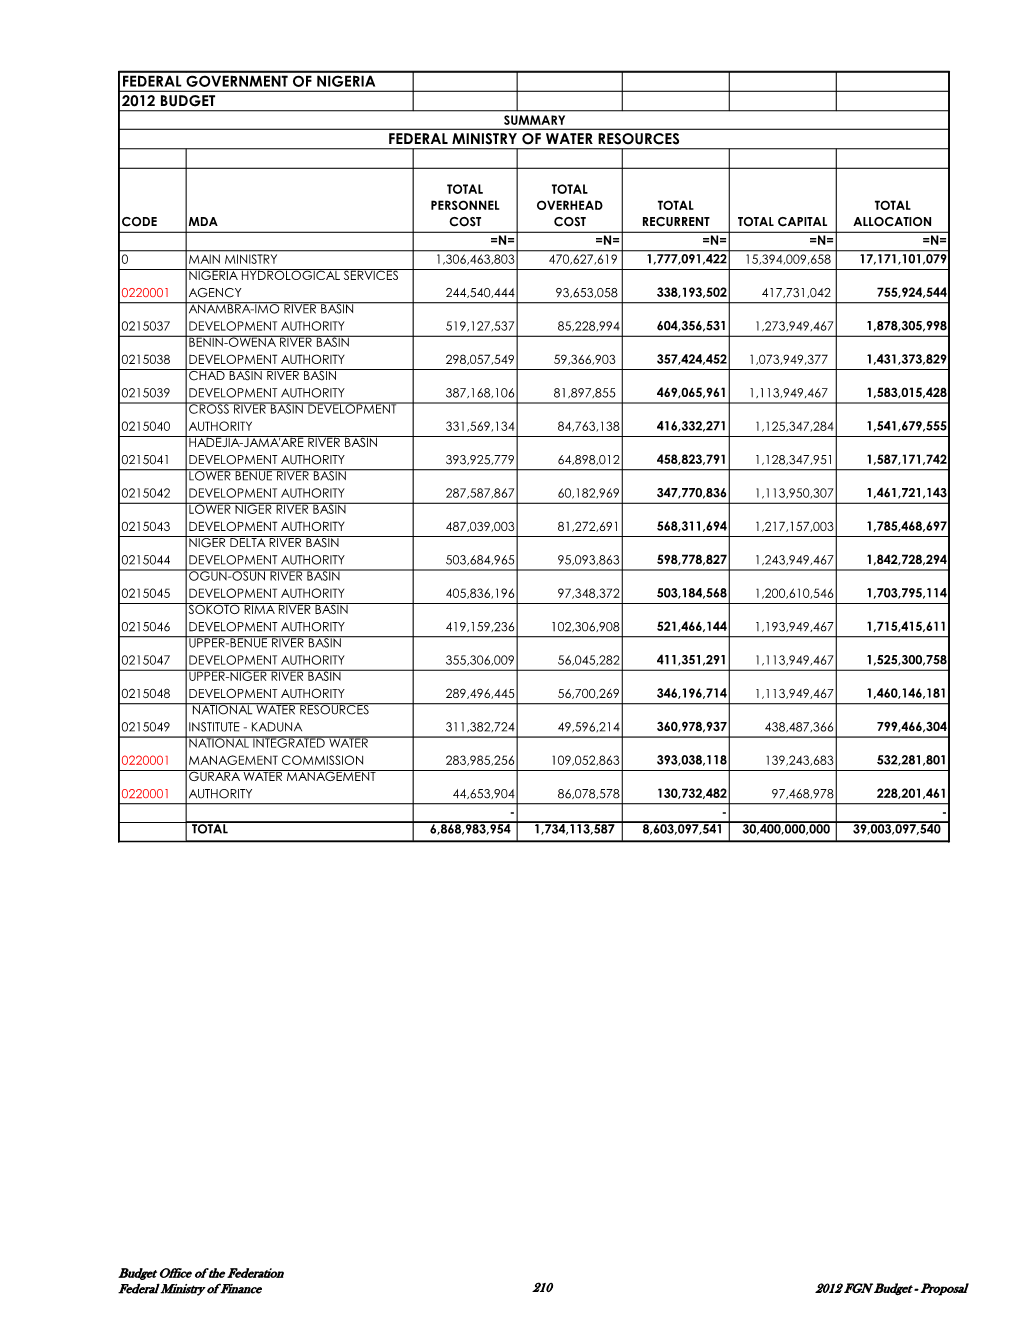 Federal Government of Nigeria 2012 Budget Federal